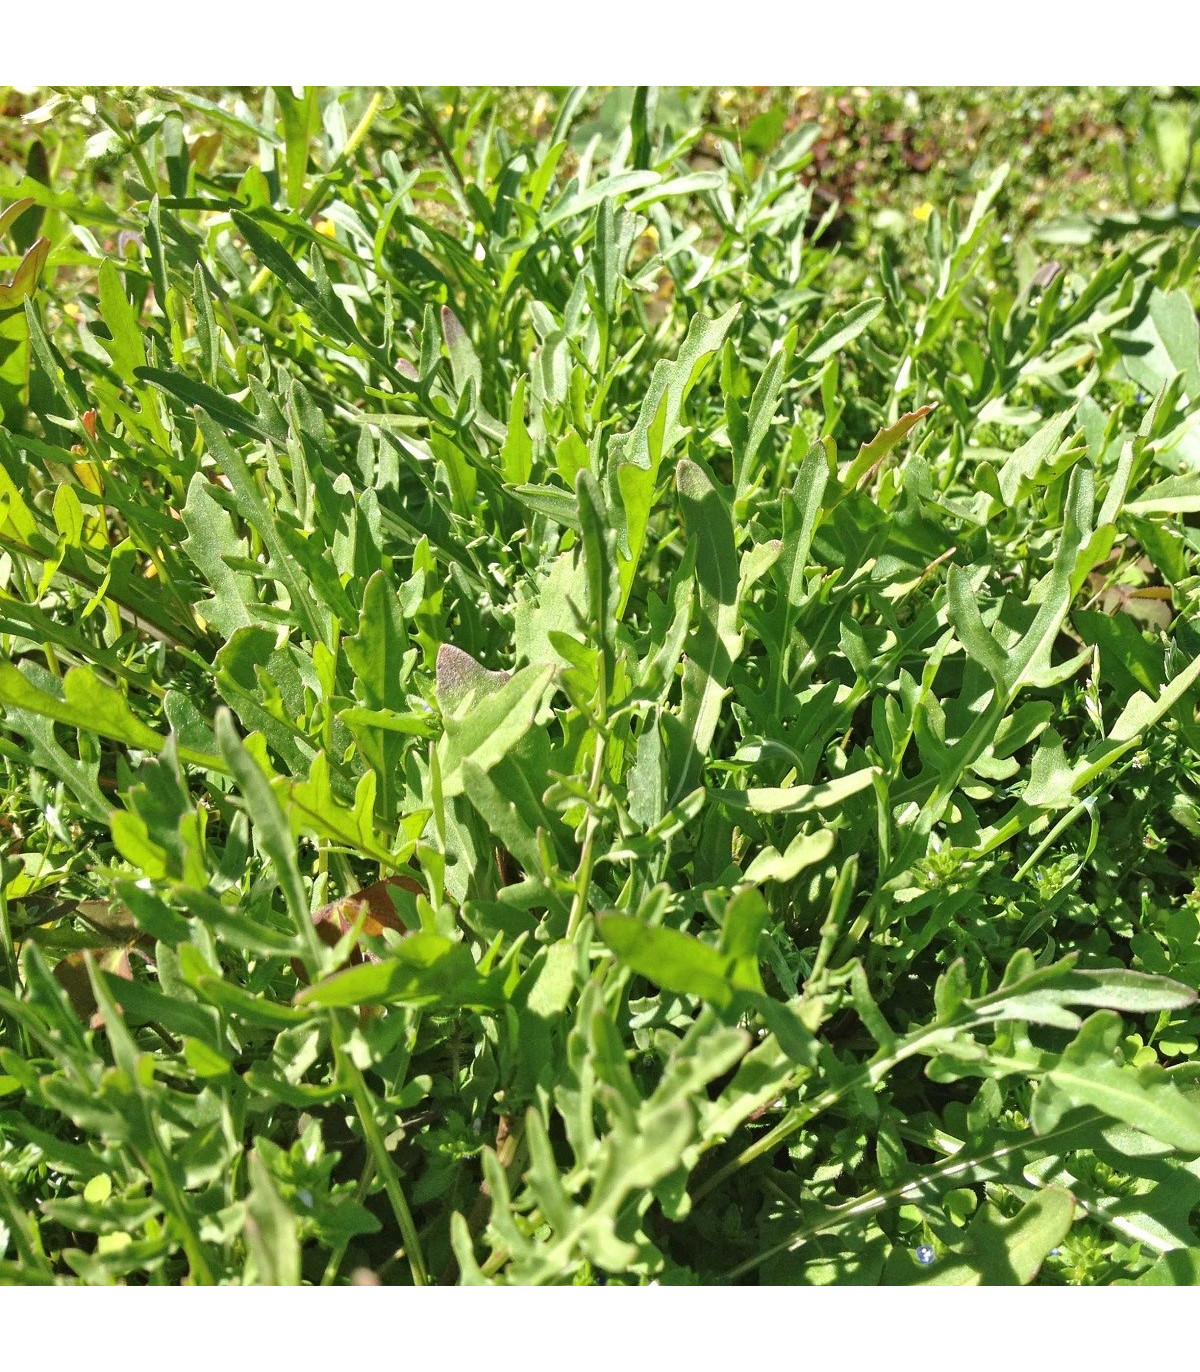 Divoká roketa - Wild rocket - rostlina Diplotaxis tenuiflora- prodej semen - 0,5 gr